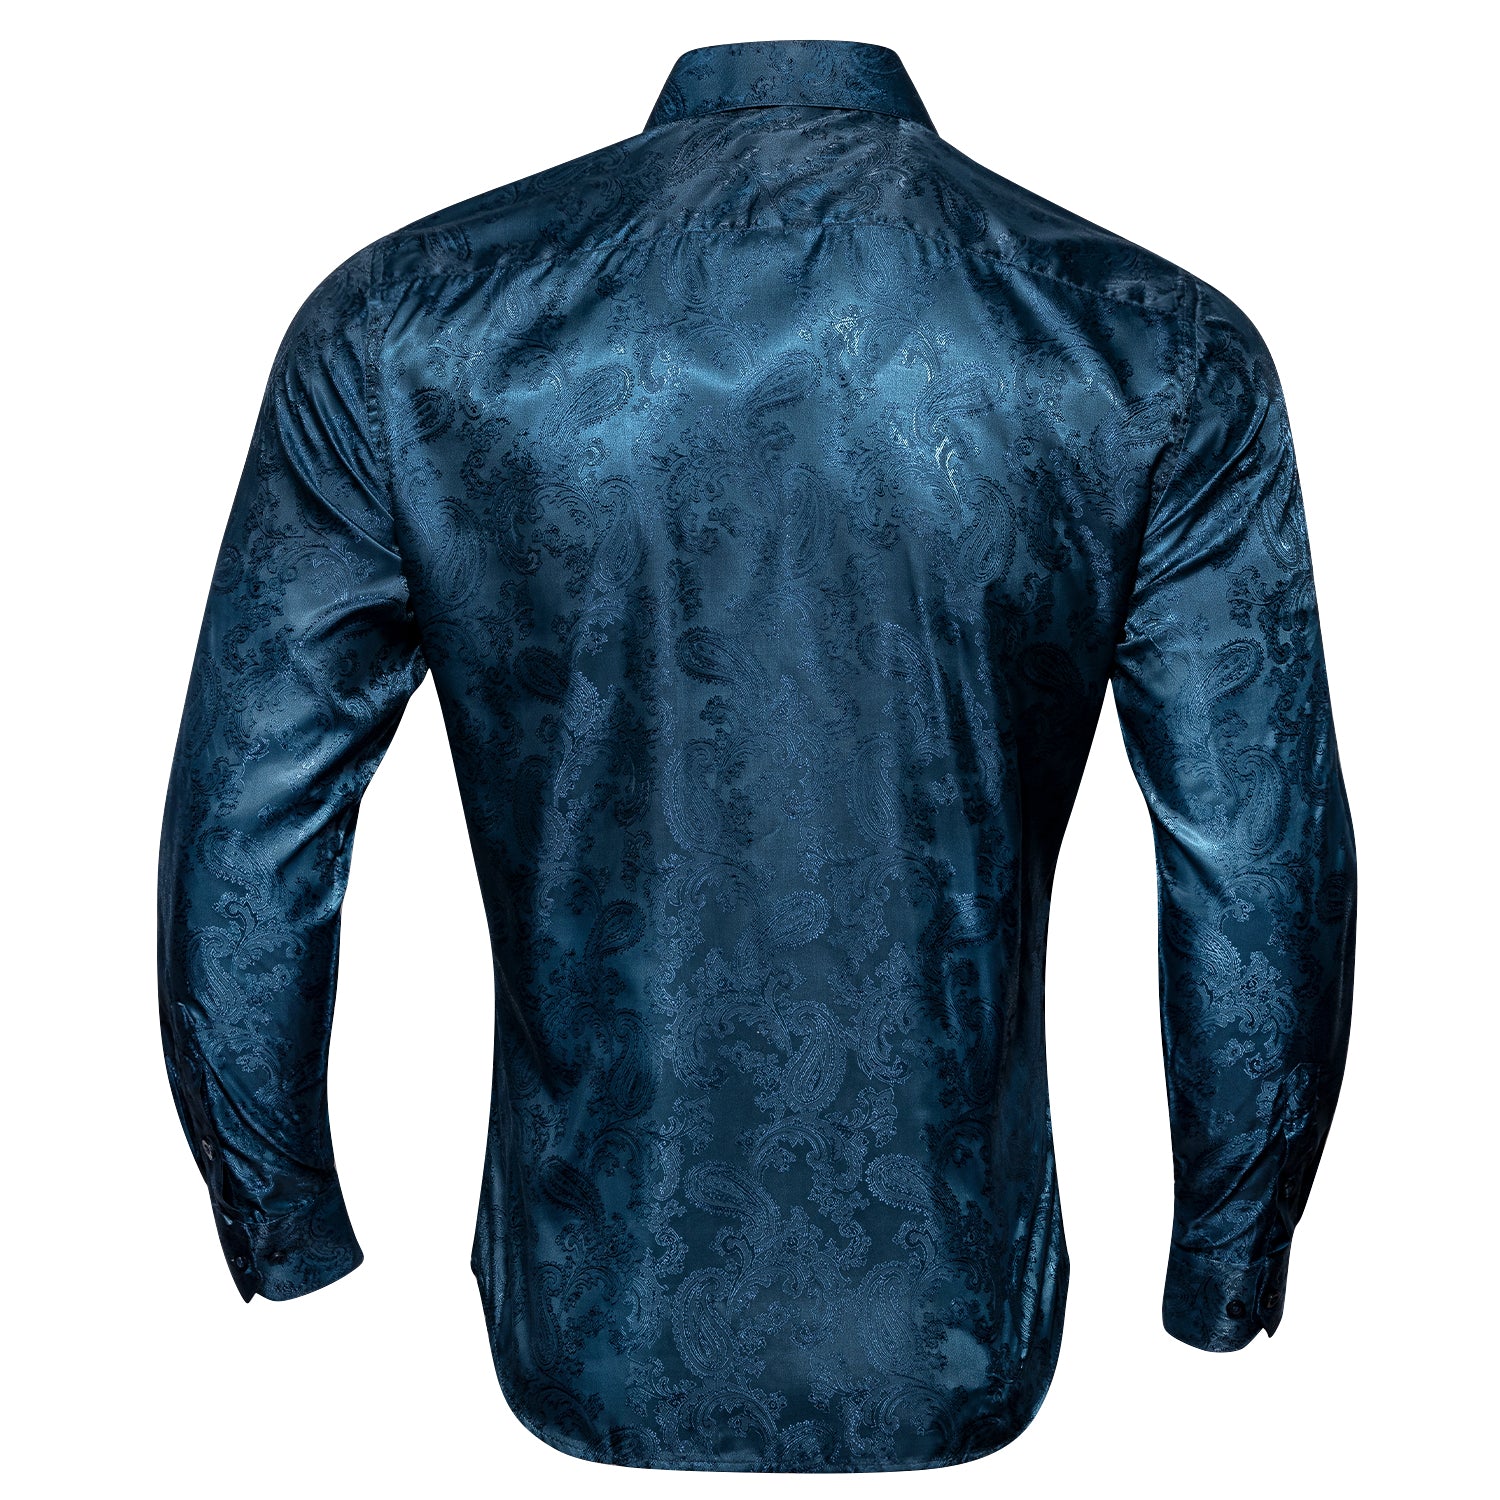 Barry.wang Luxury Navy Blue Paisley Long Sleeves Silk Shirt